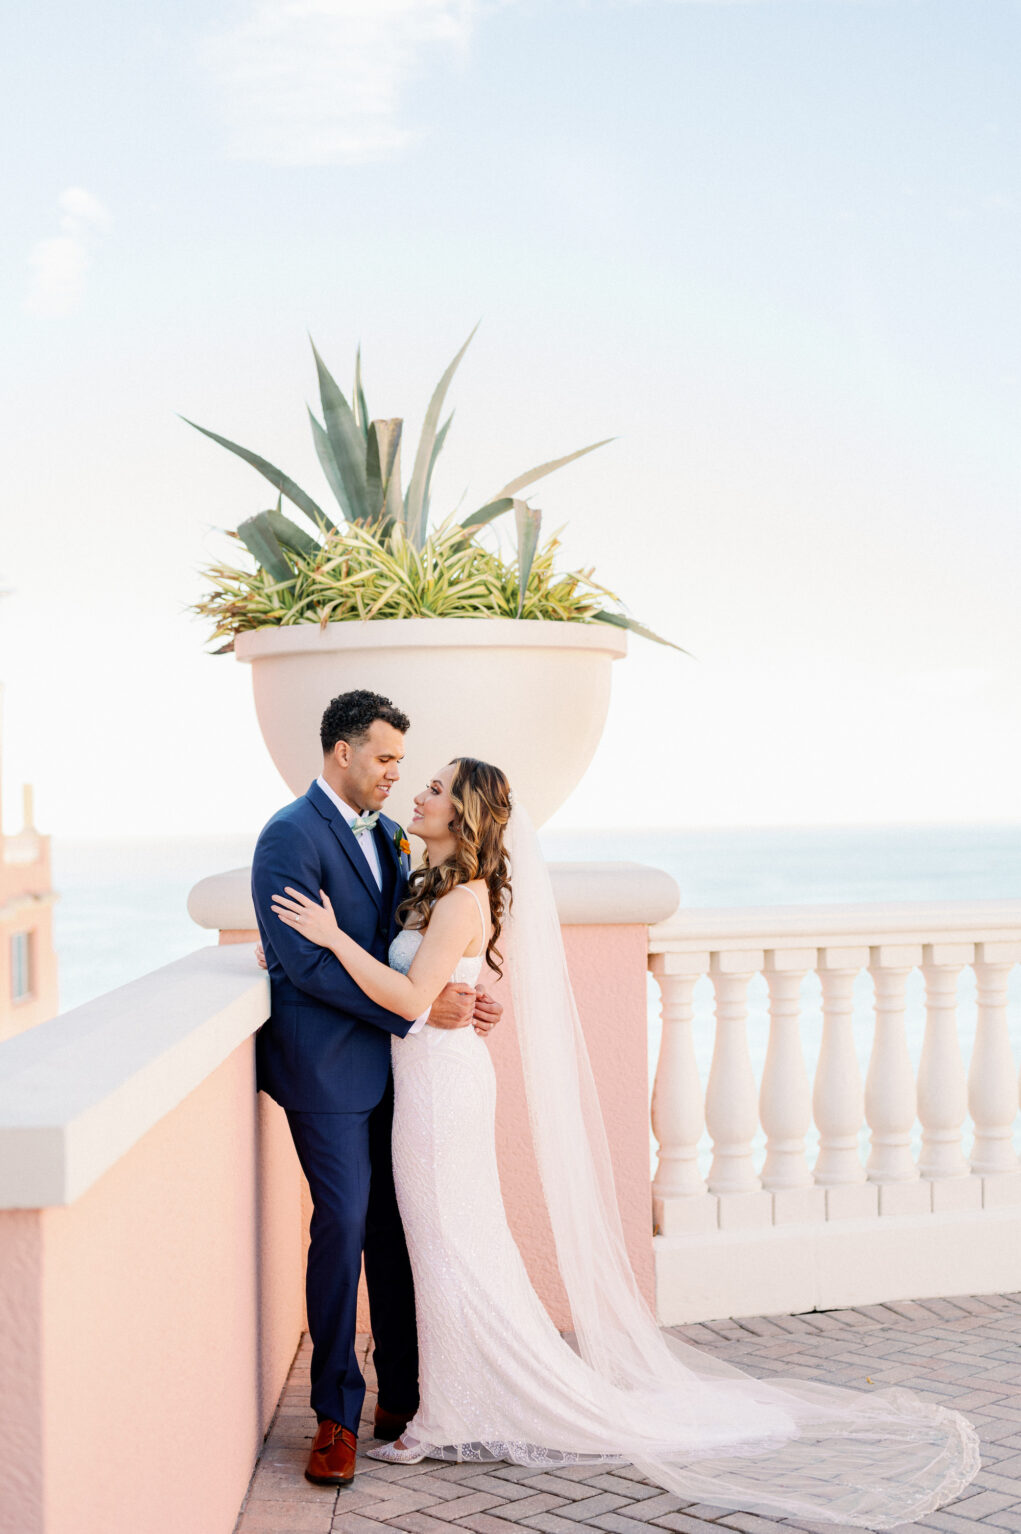 Bride and Groom First Look Wedding Portrait | Florida Wedding Photographer Dewitt for Love | Florida Wedding Venue Hyatt Regency Clearwater Beach